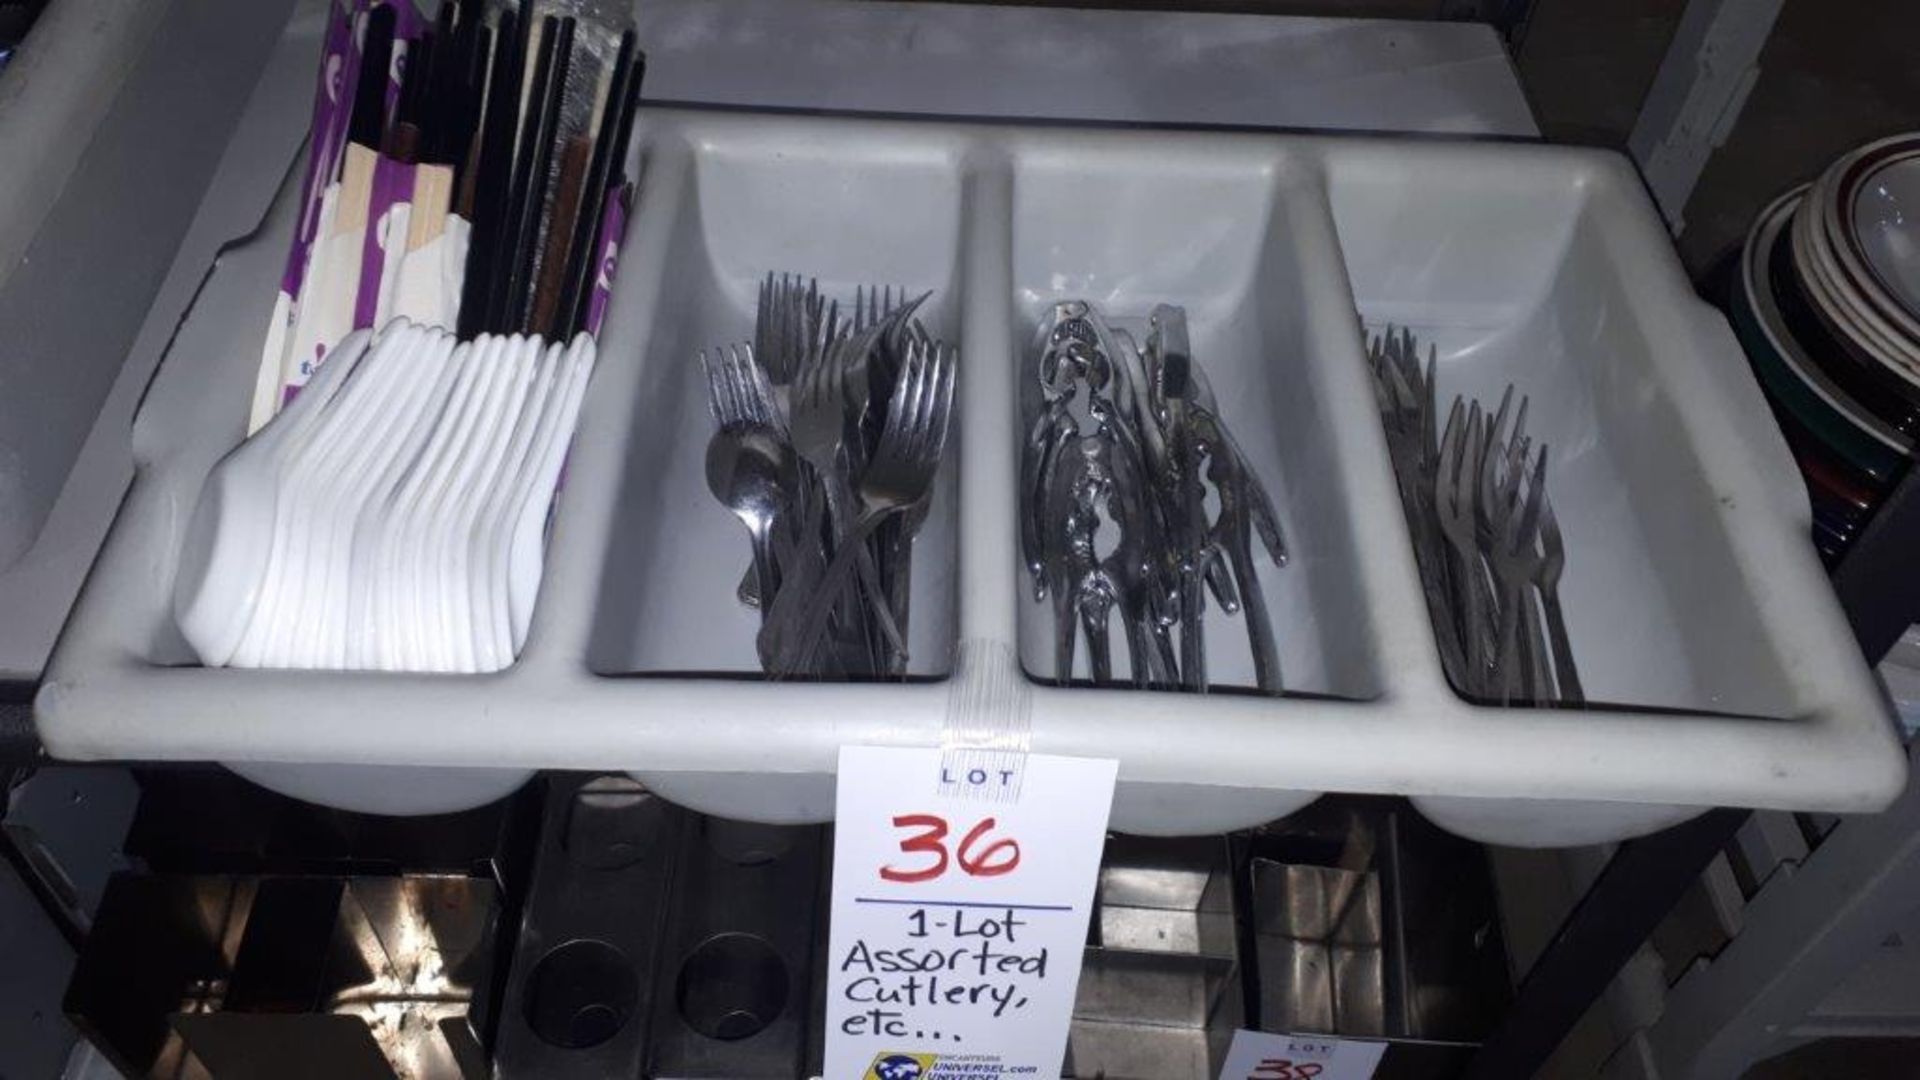 Assorted cutlery,etc…(Lot)